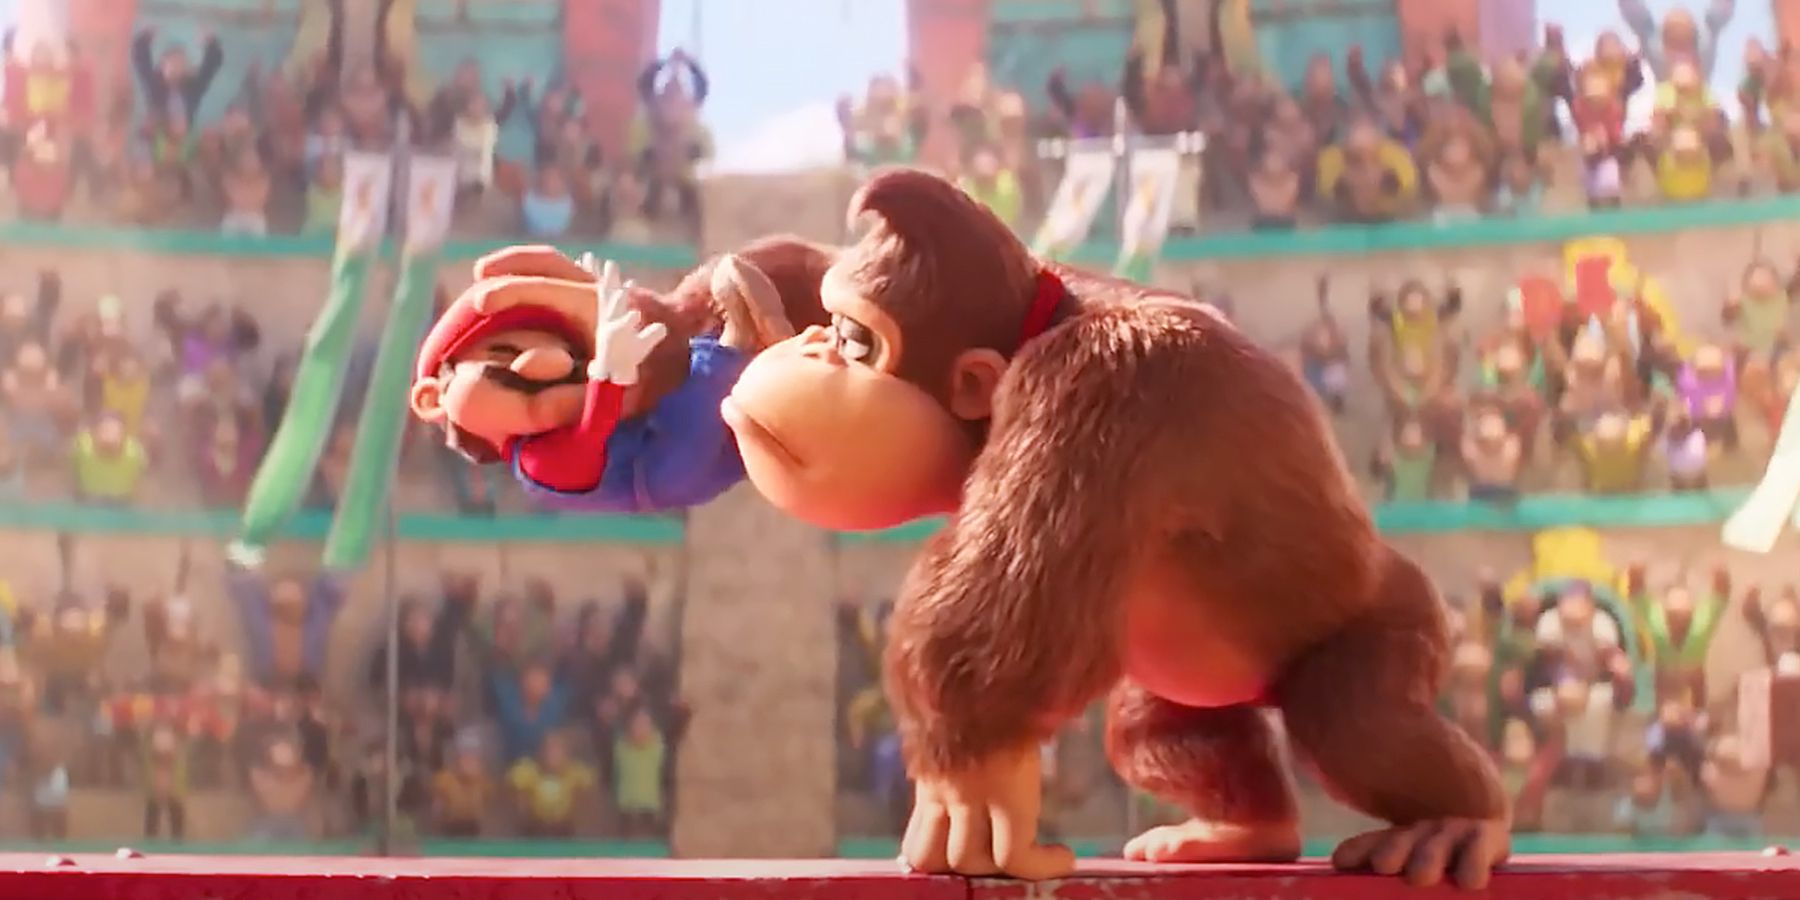 Shigeru Miyamoto Reveals Why Donkey Kong Got a Redesign For The Super Mario  Bros. Movie - IGN